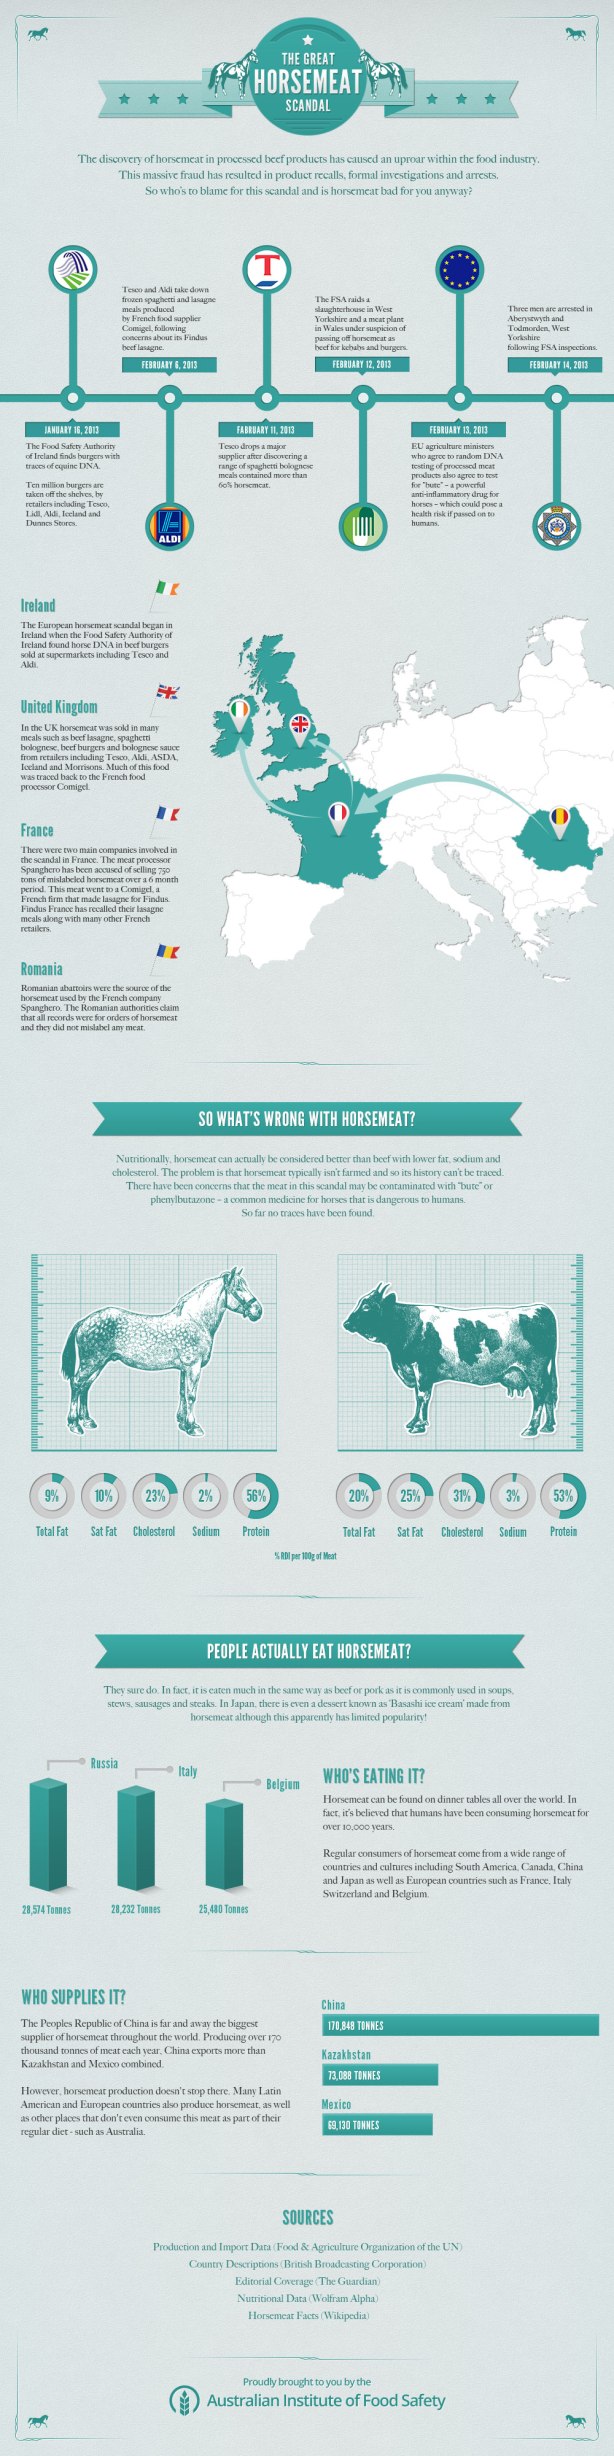 infographic-horsemeat